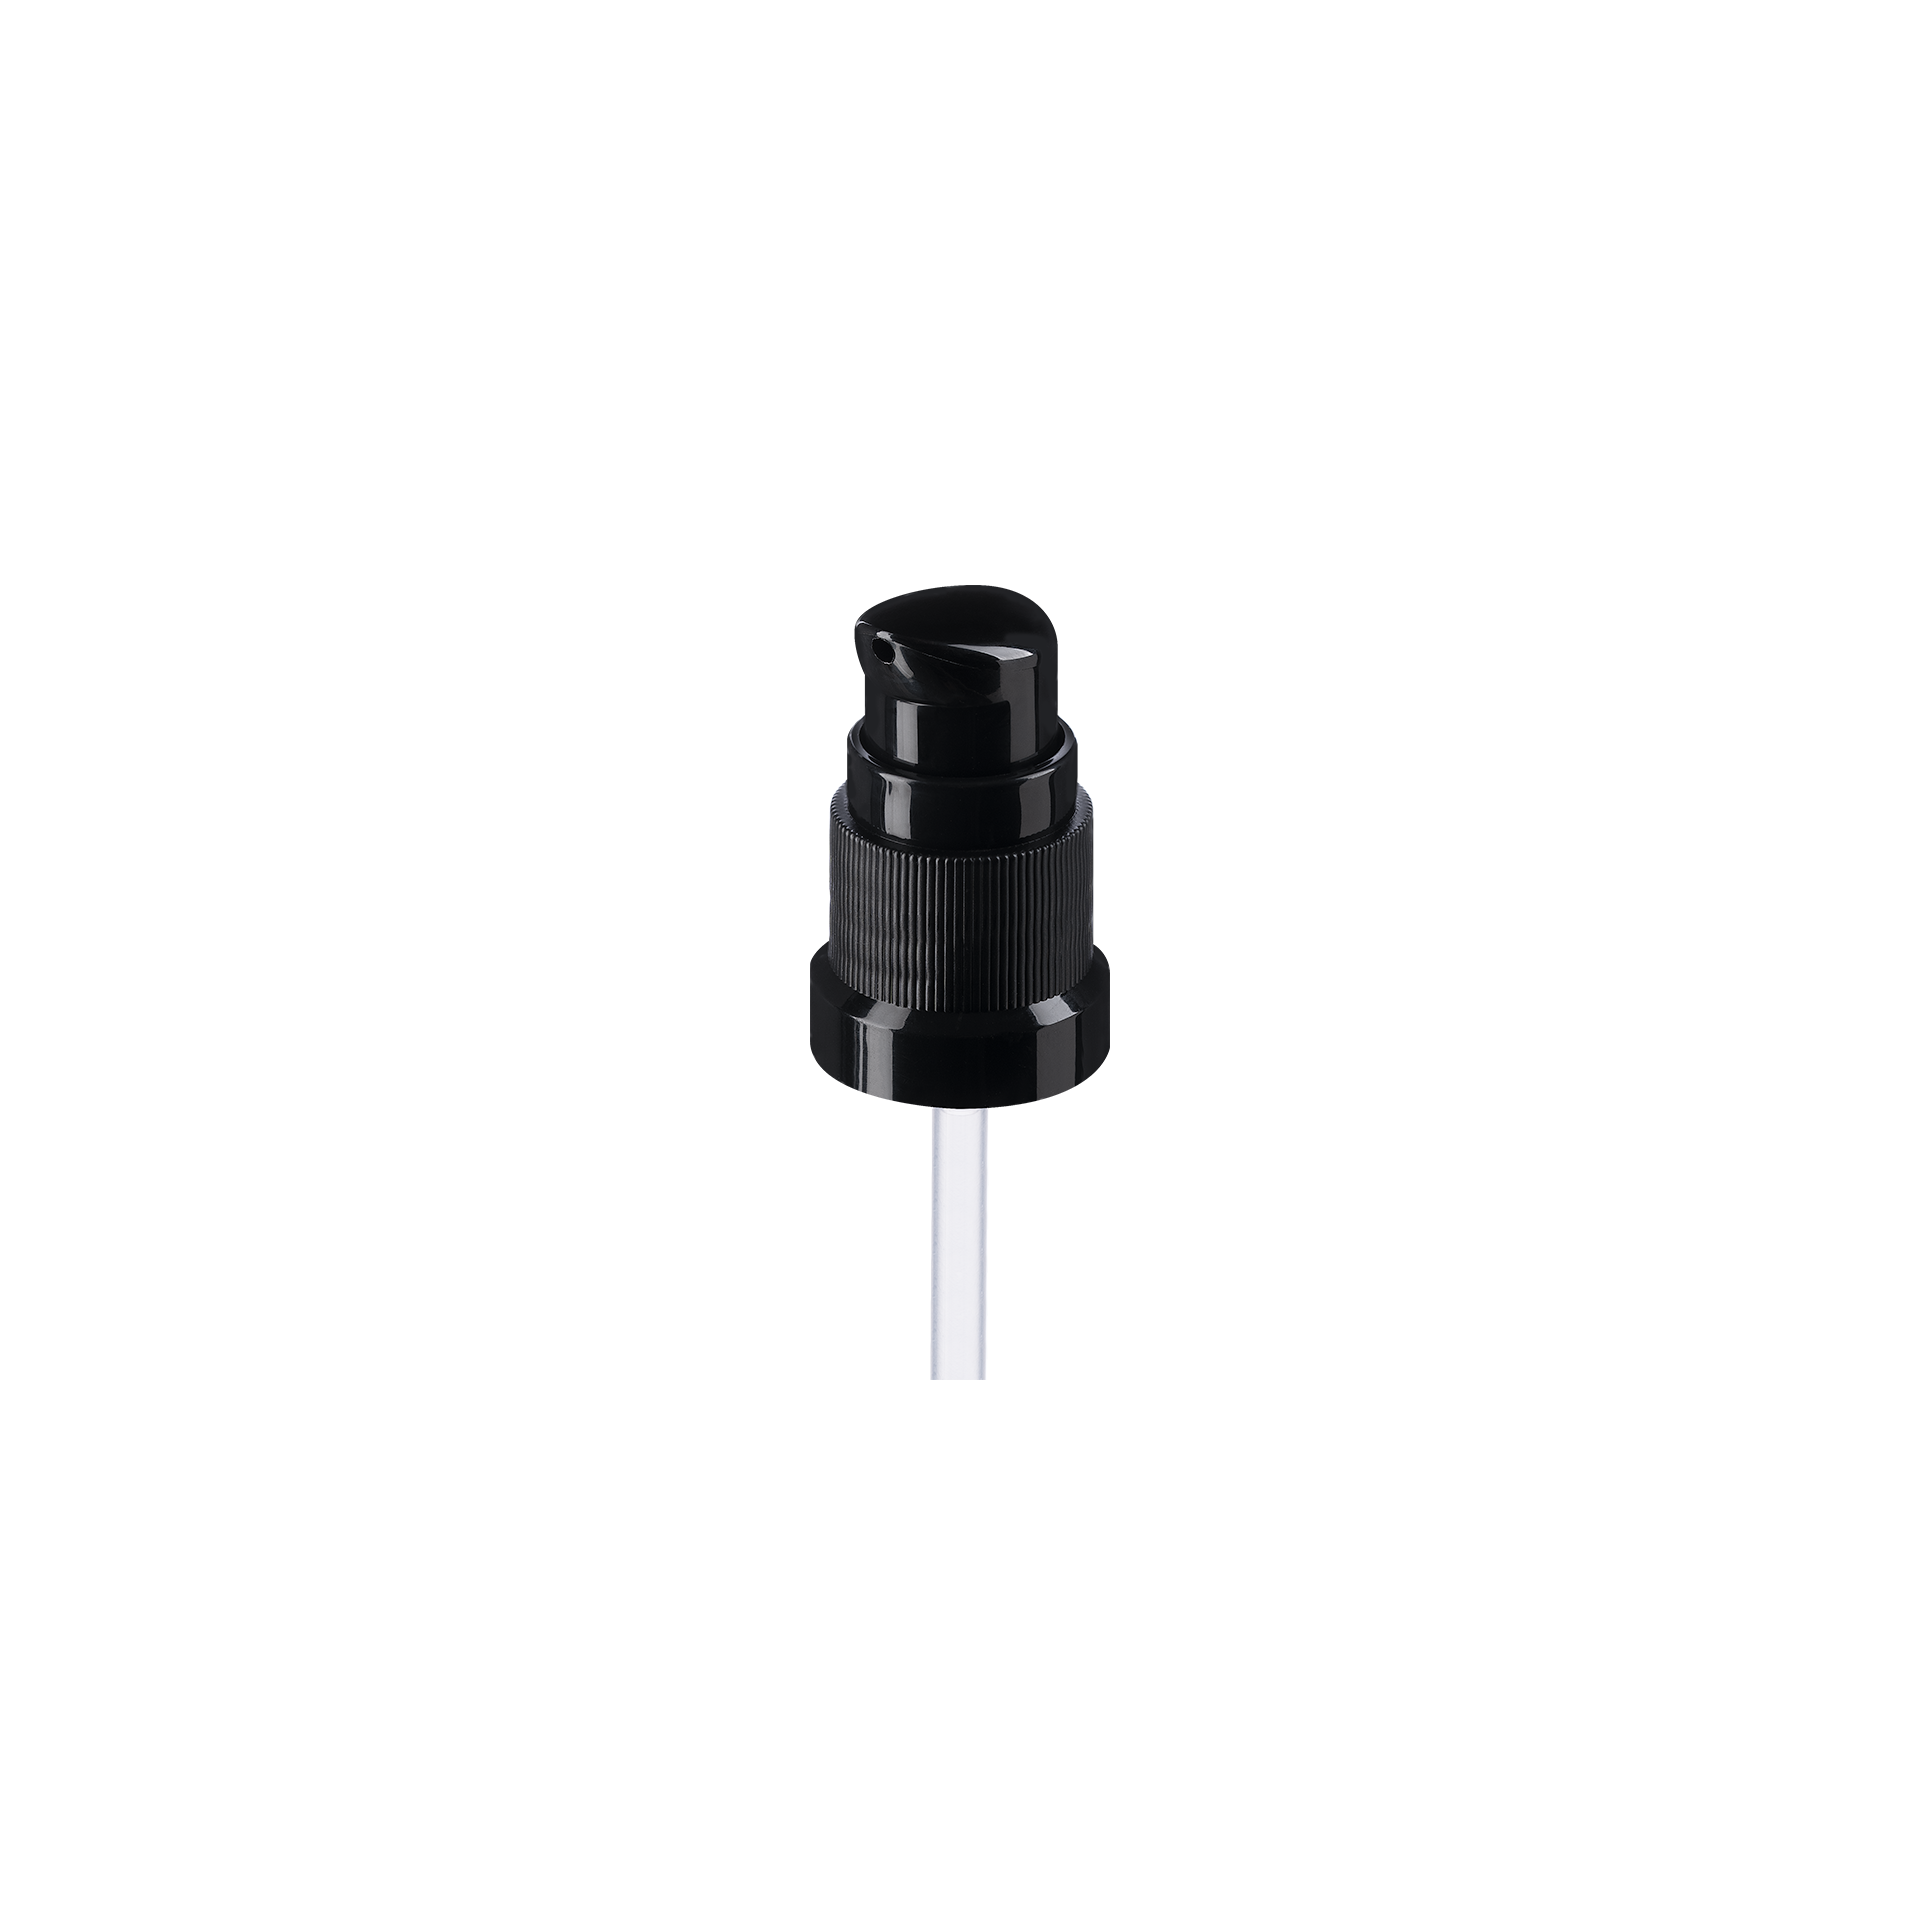 Lotion pump Metropolitan DIN18, PP, black, dose 0.10ml, black security clip (Ginger 20)